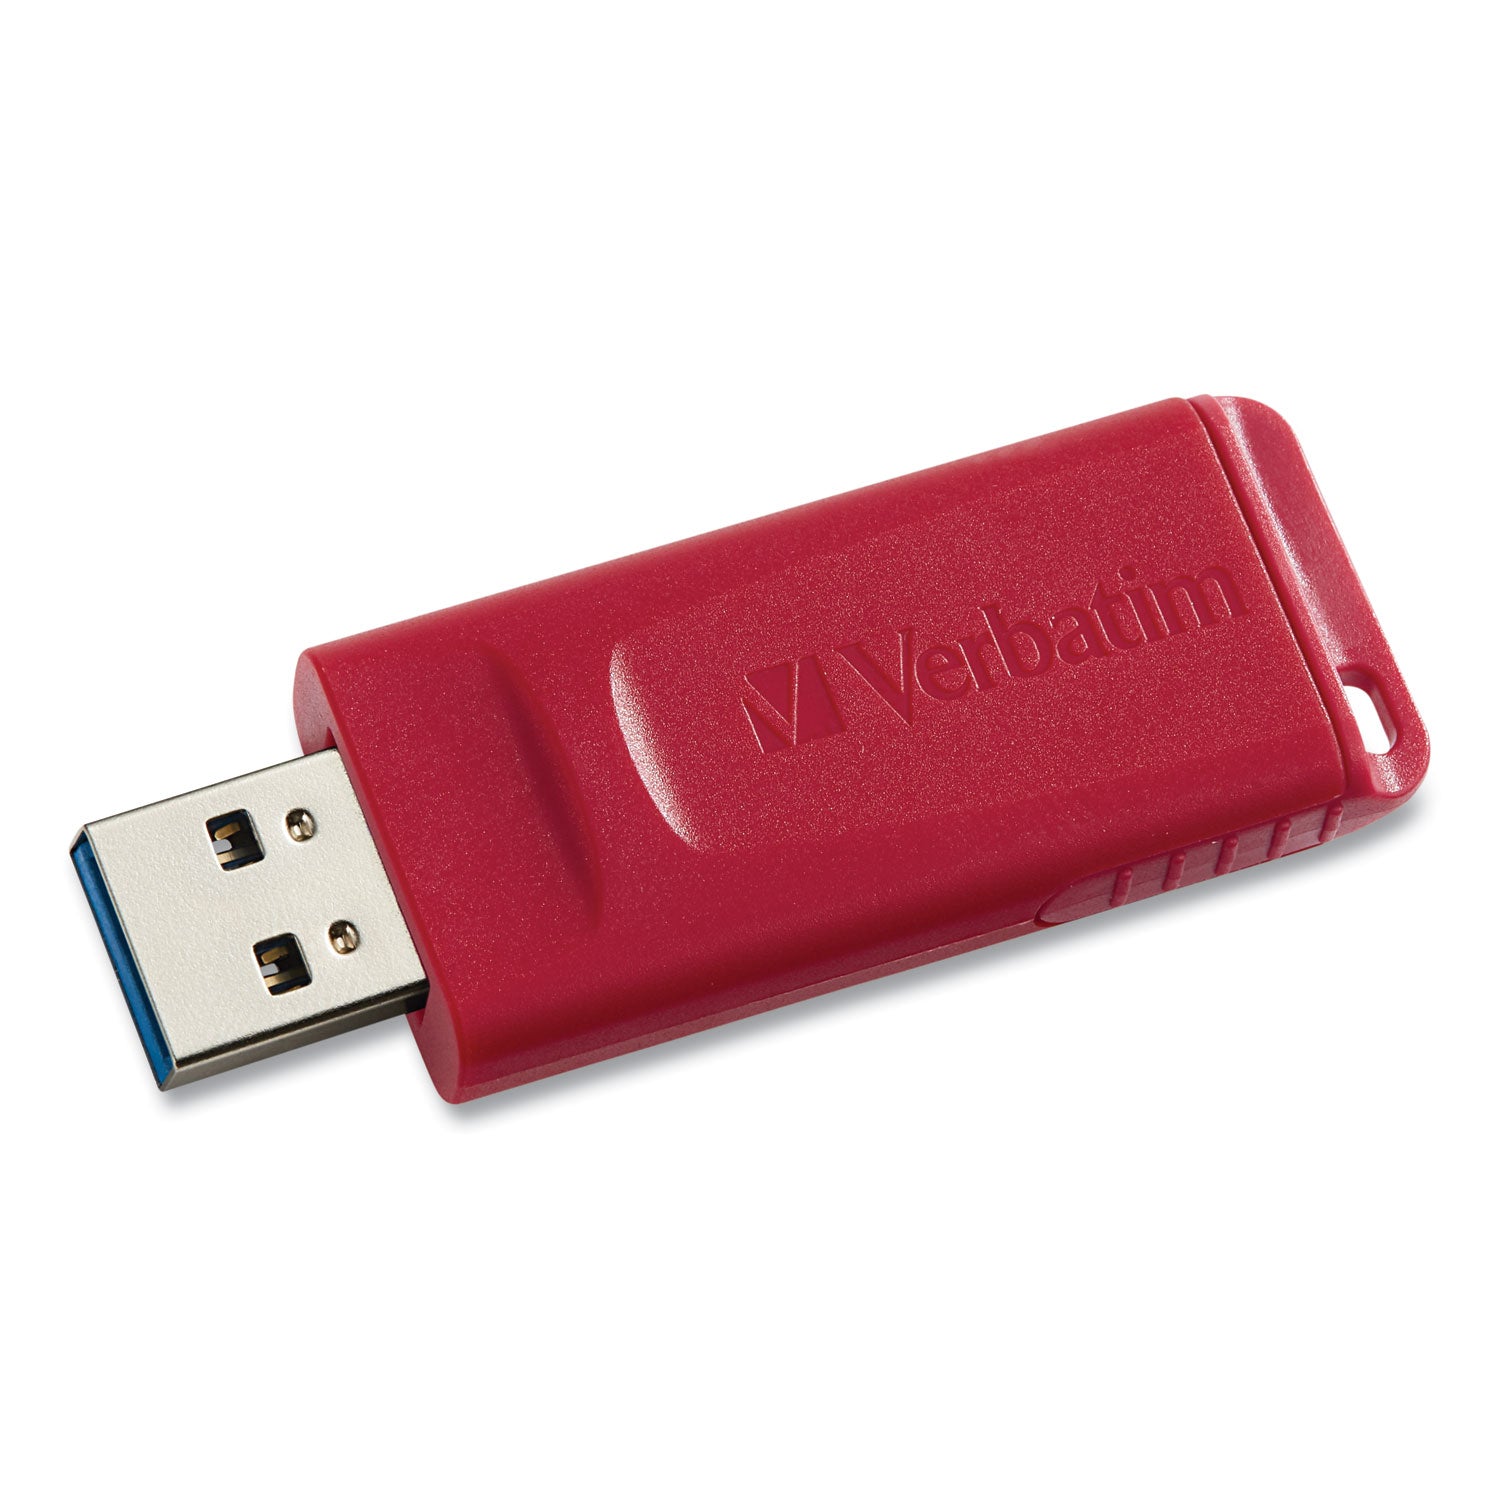 Store 'n' Go USB Flash Drive, 32 GB, Red - 